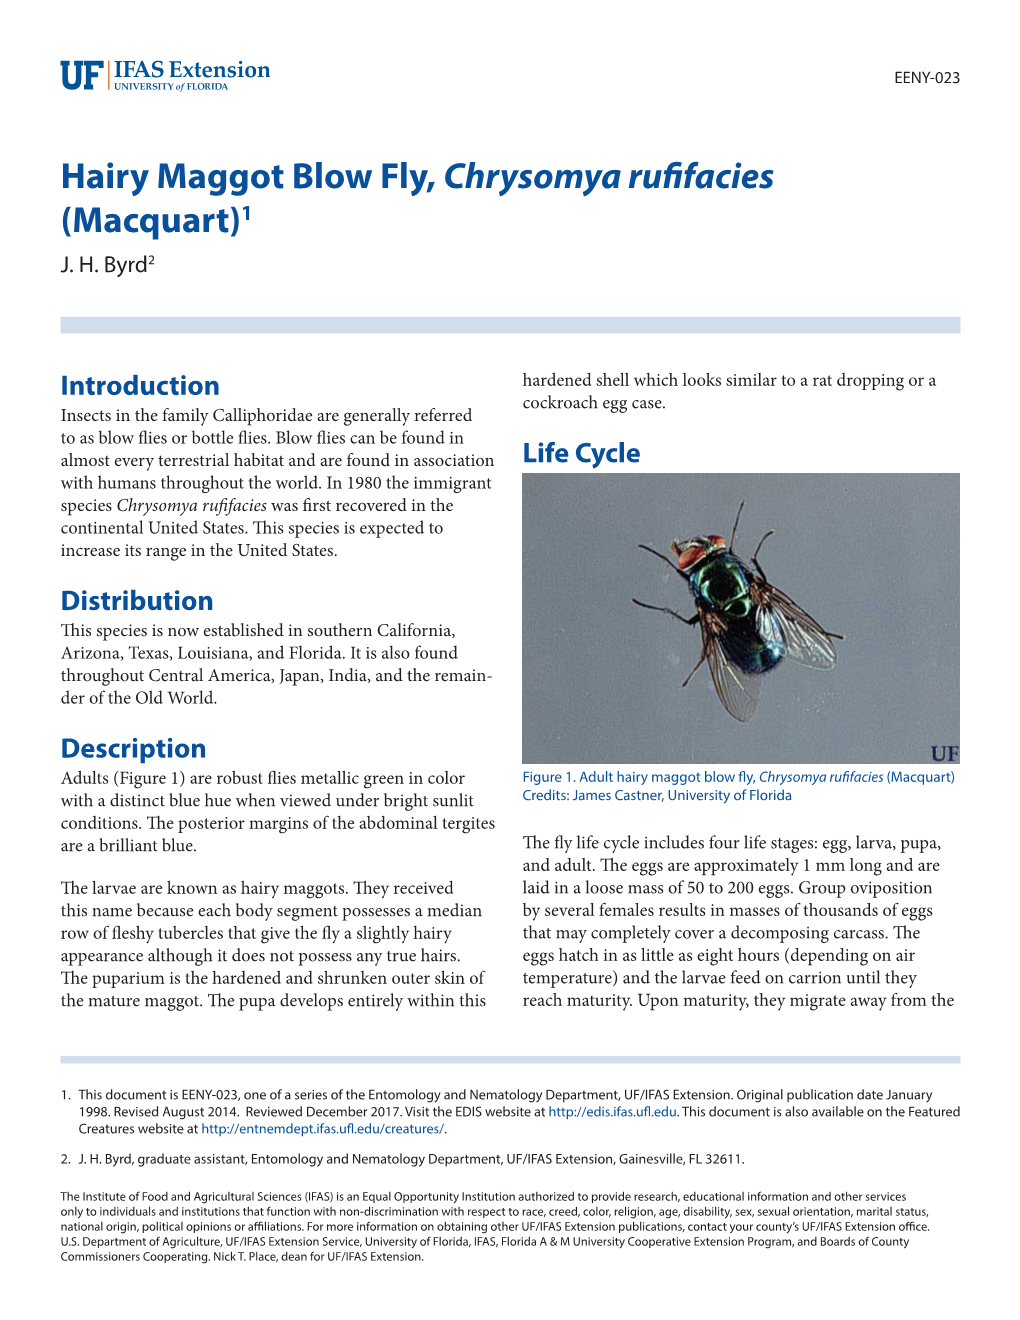 Hairy Maggot Blow Fly, Chrysomya Rufifacies (Macquart)1 J